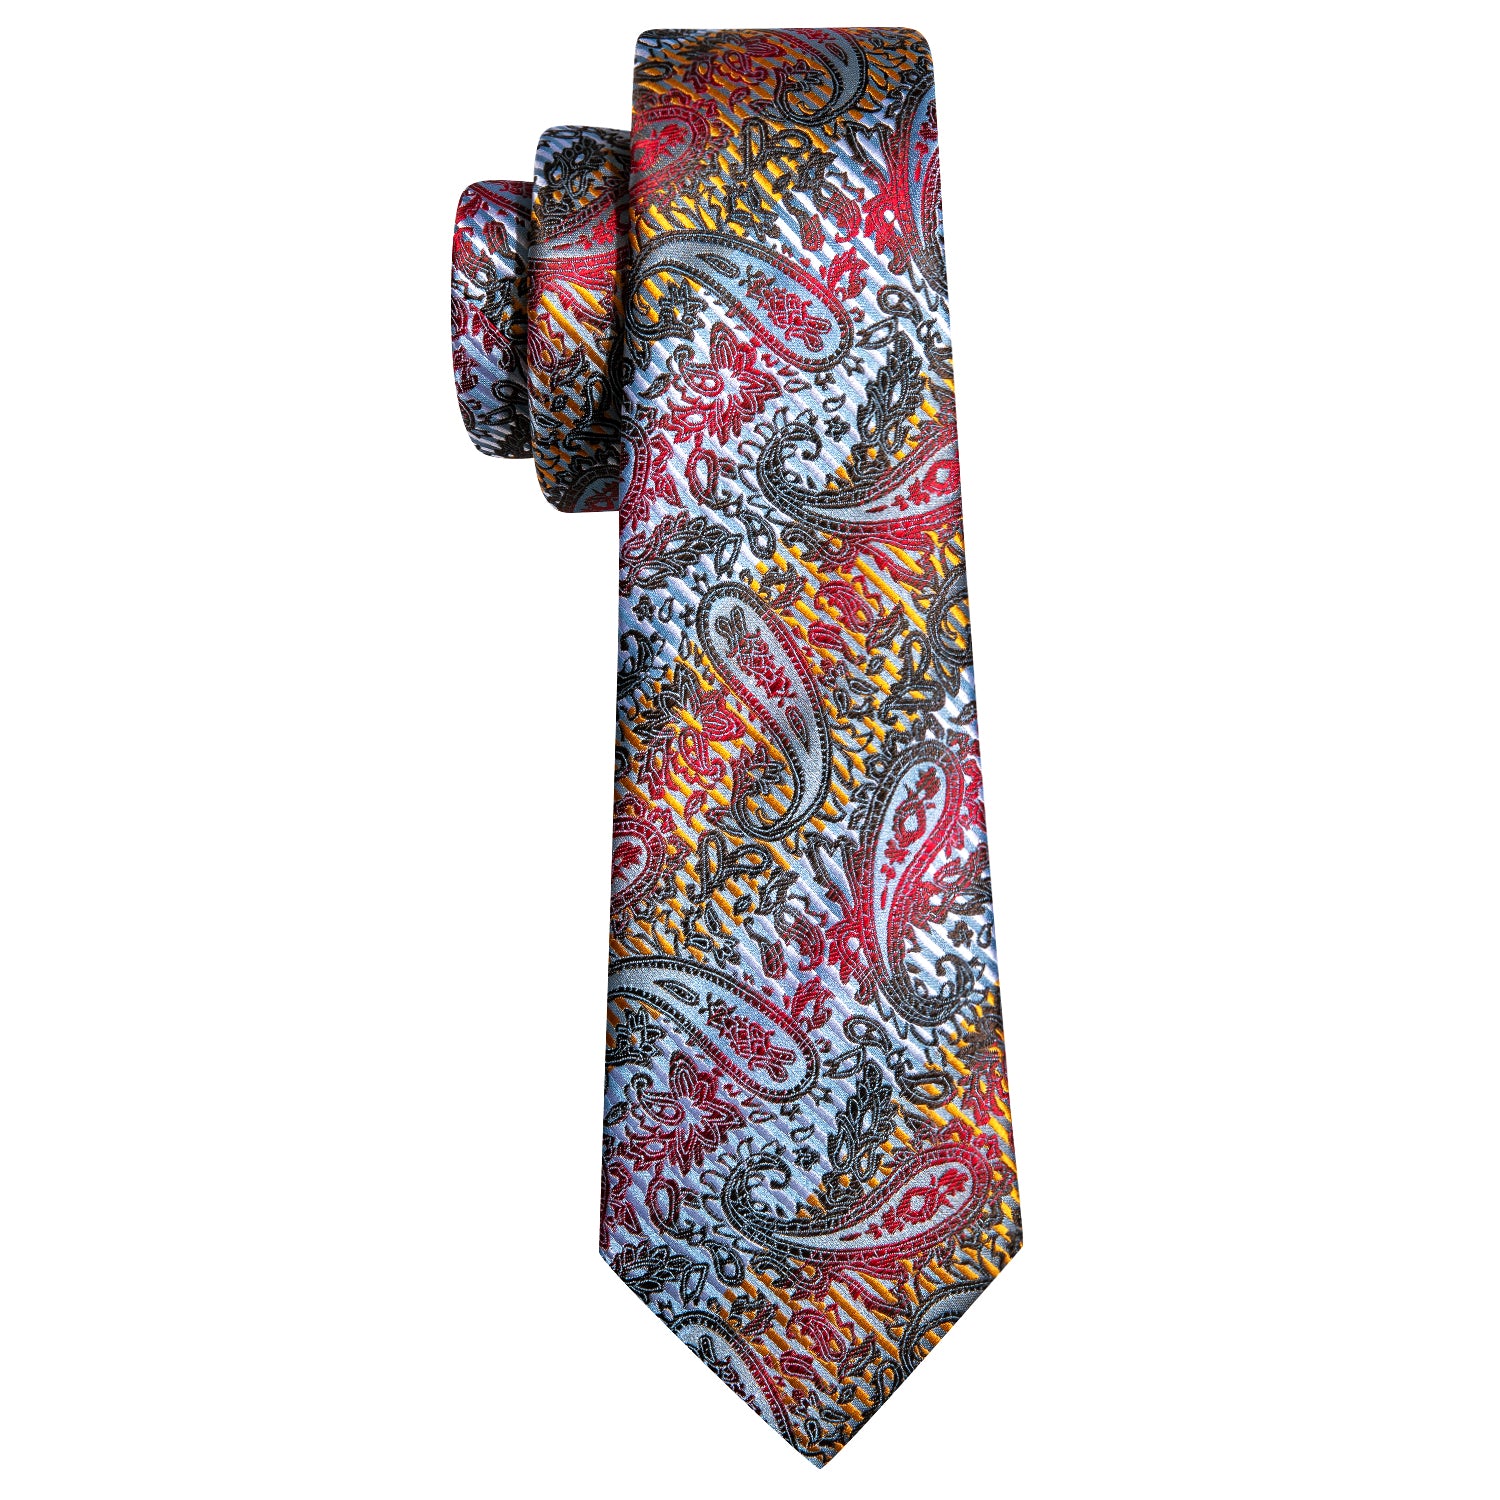 New Bright Colorful Paisley Silk Tie Hanky Cufflinks Set